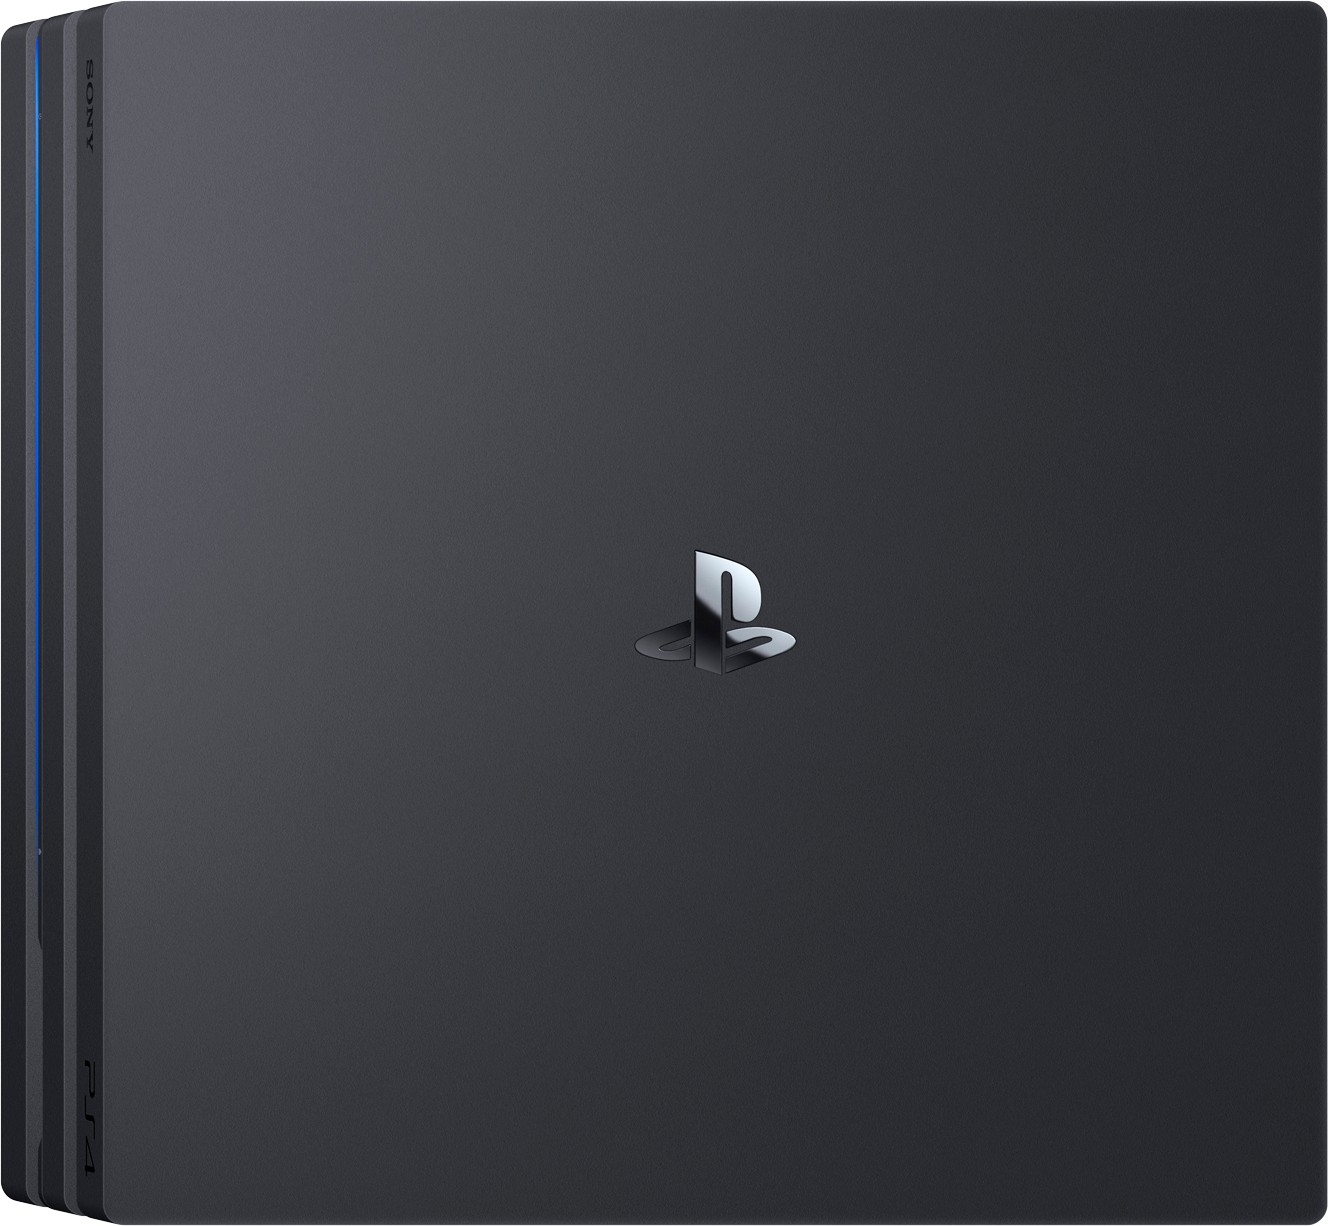 PlayStation 4 Pro (1TB, Black, Limited Edition, Mortal Kombat 11)